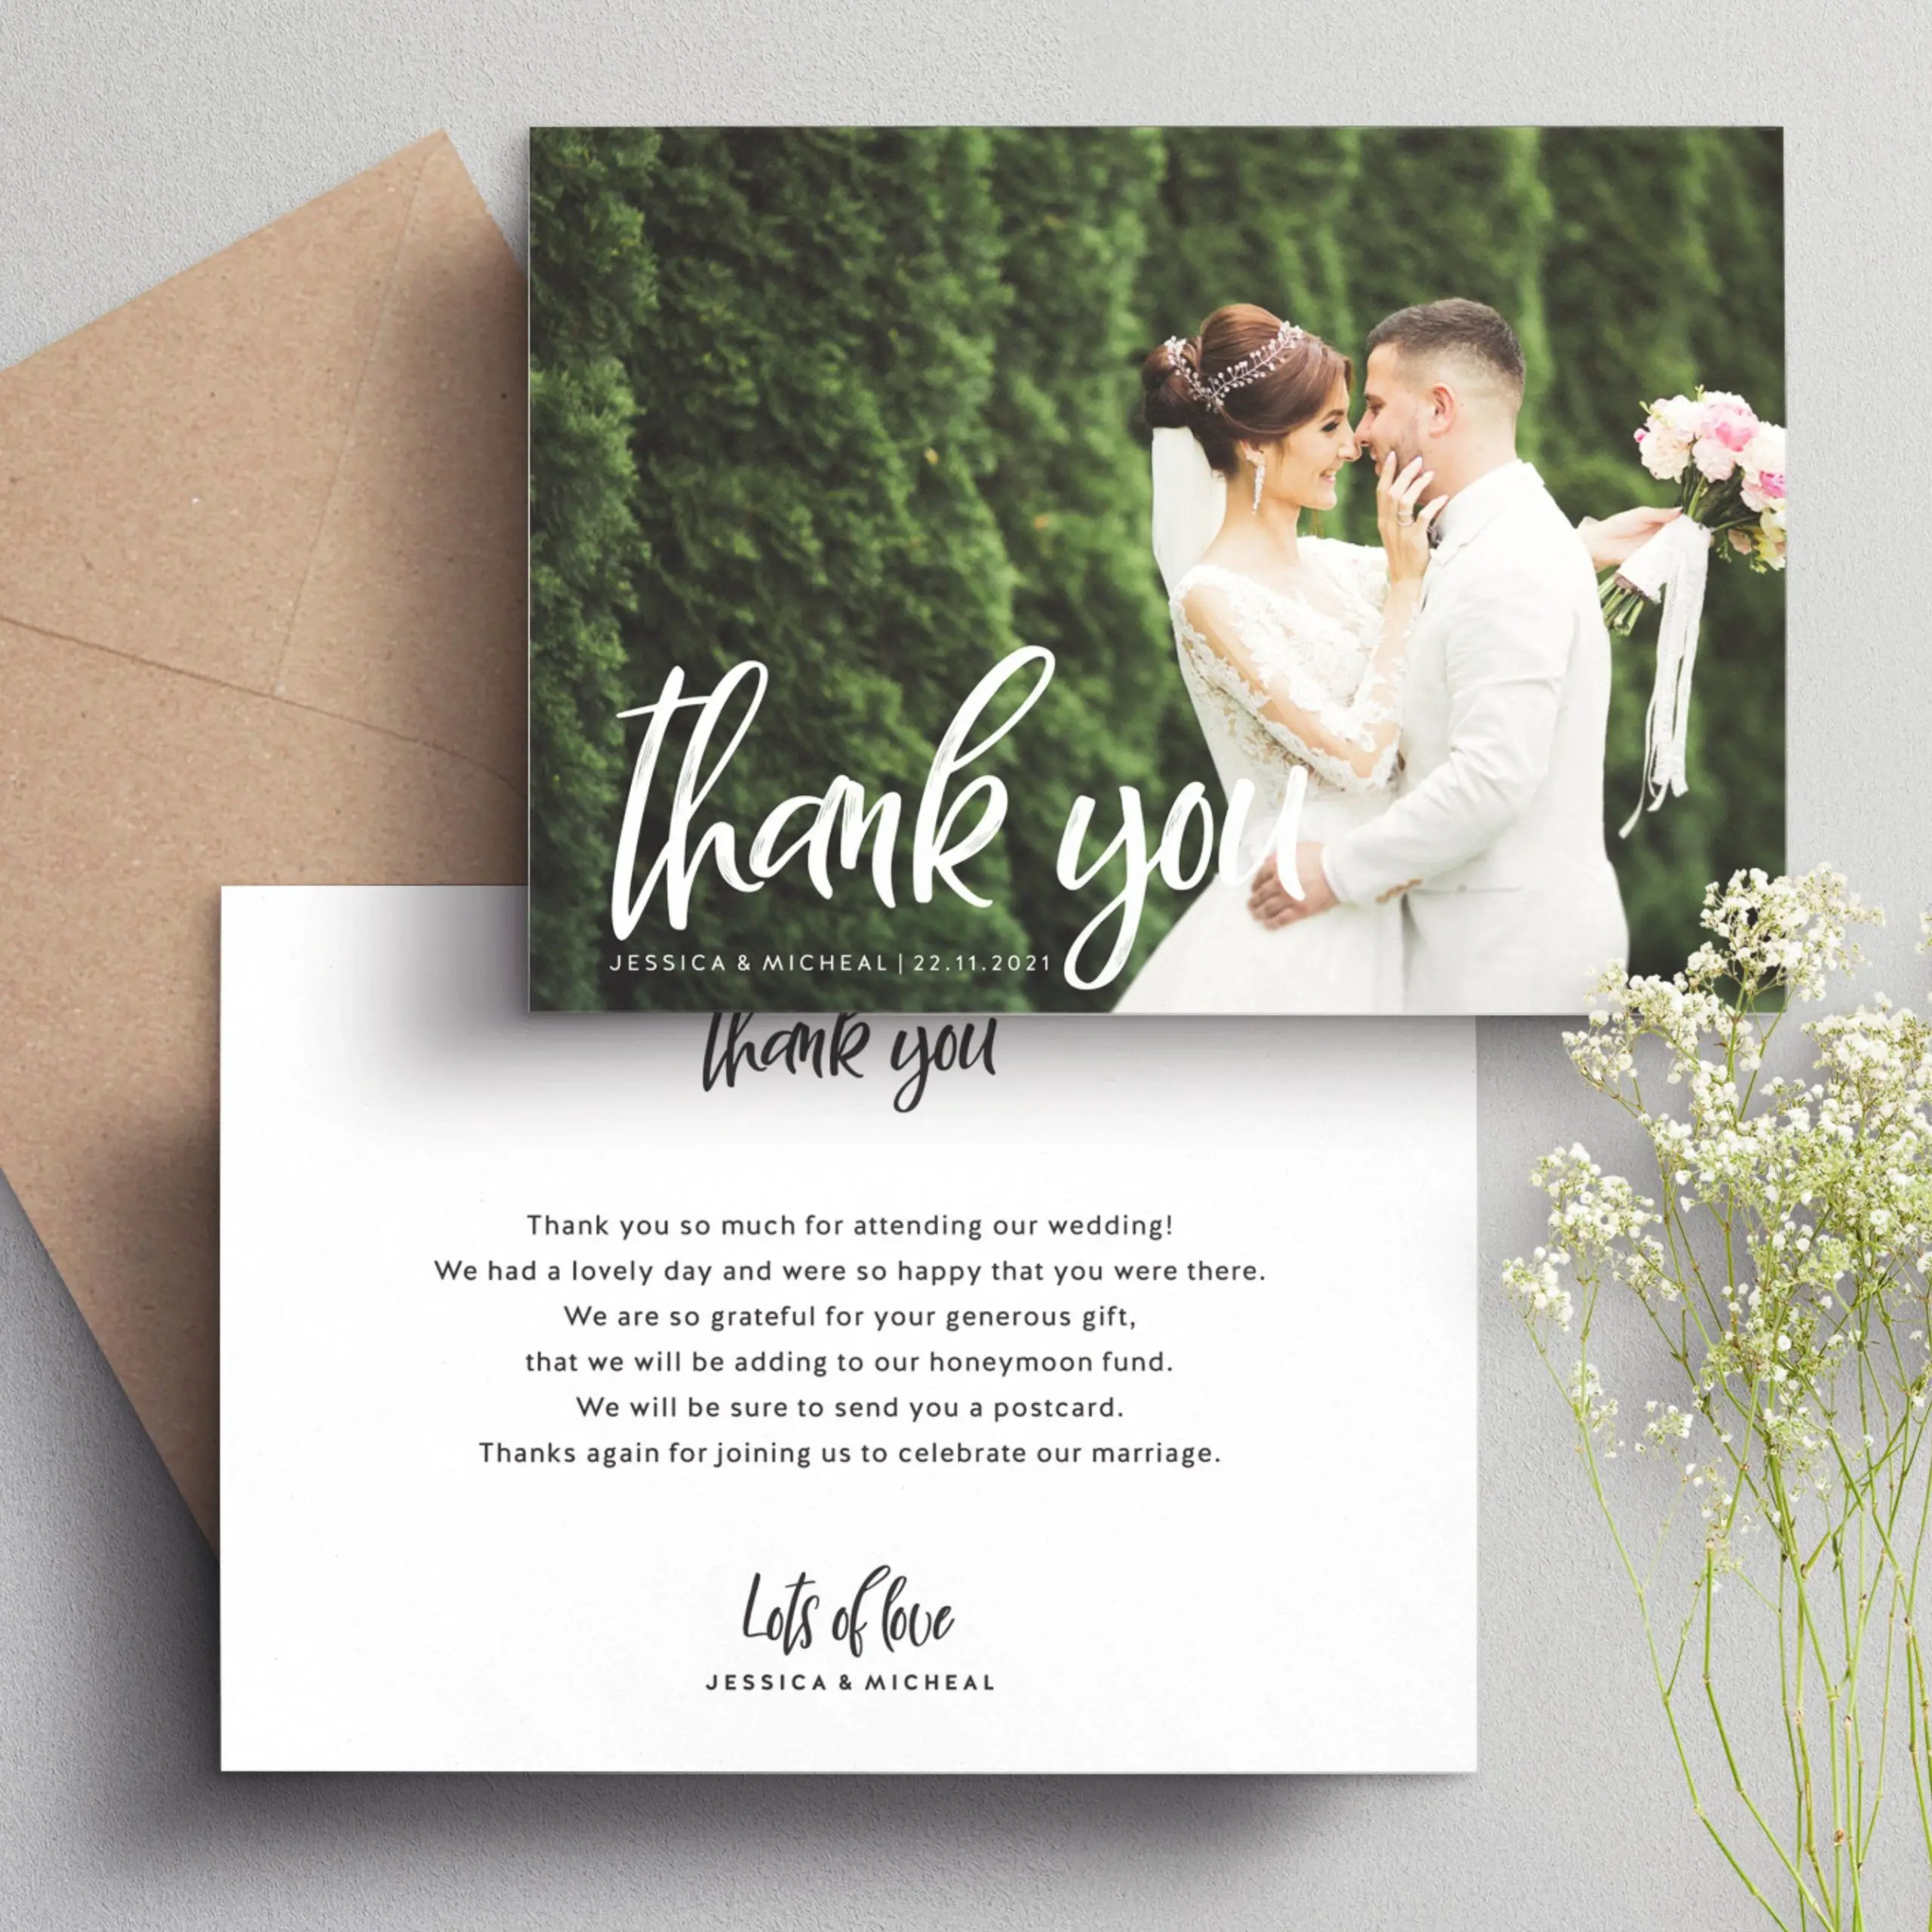 Thank You Photo Cards Wedding / Wedding Thank You Card Wording Ideas ...